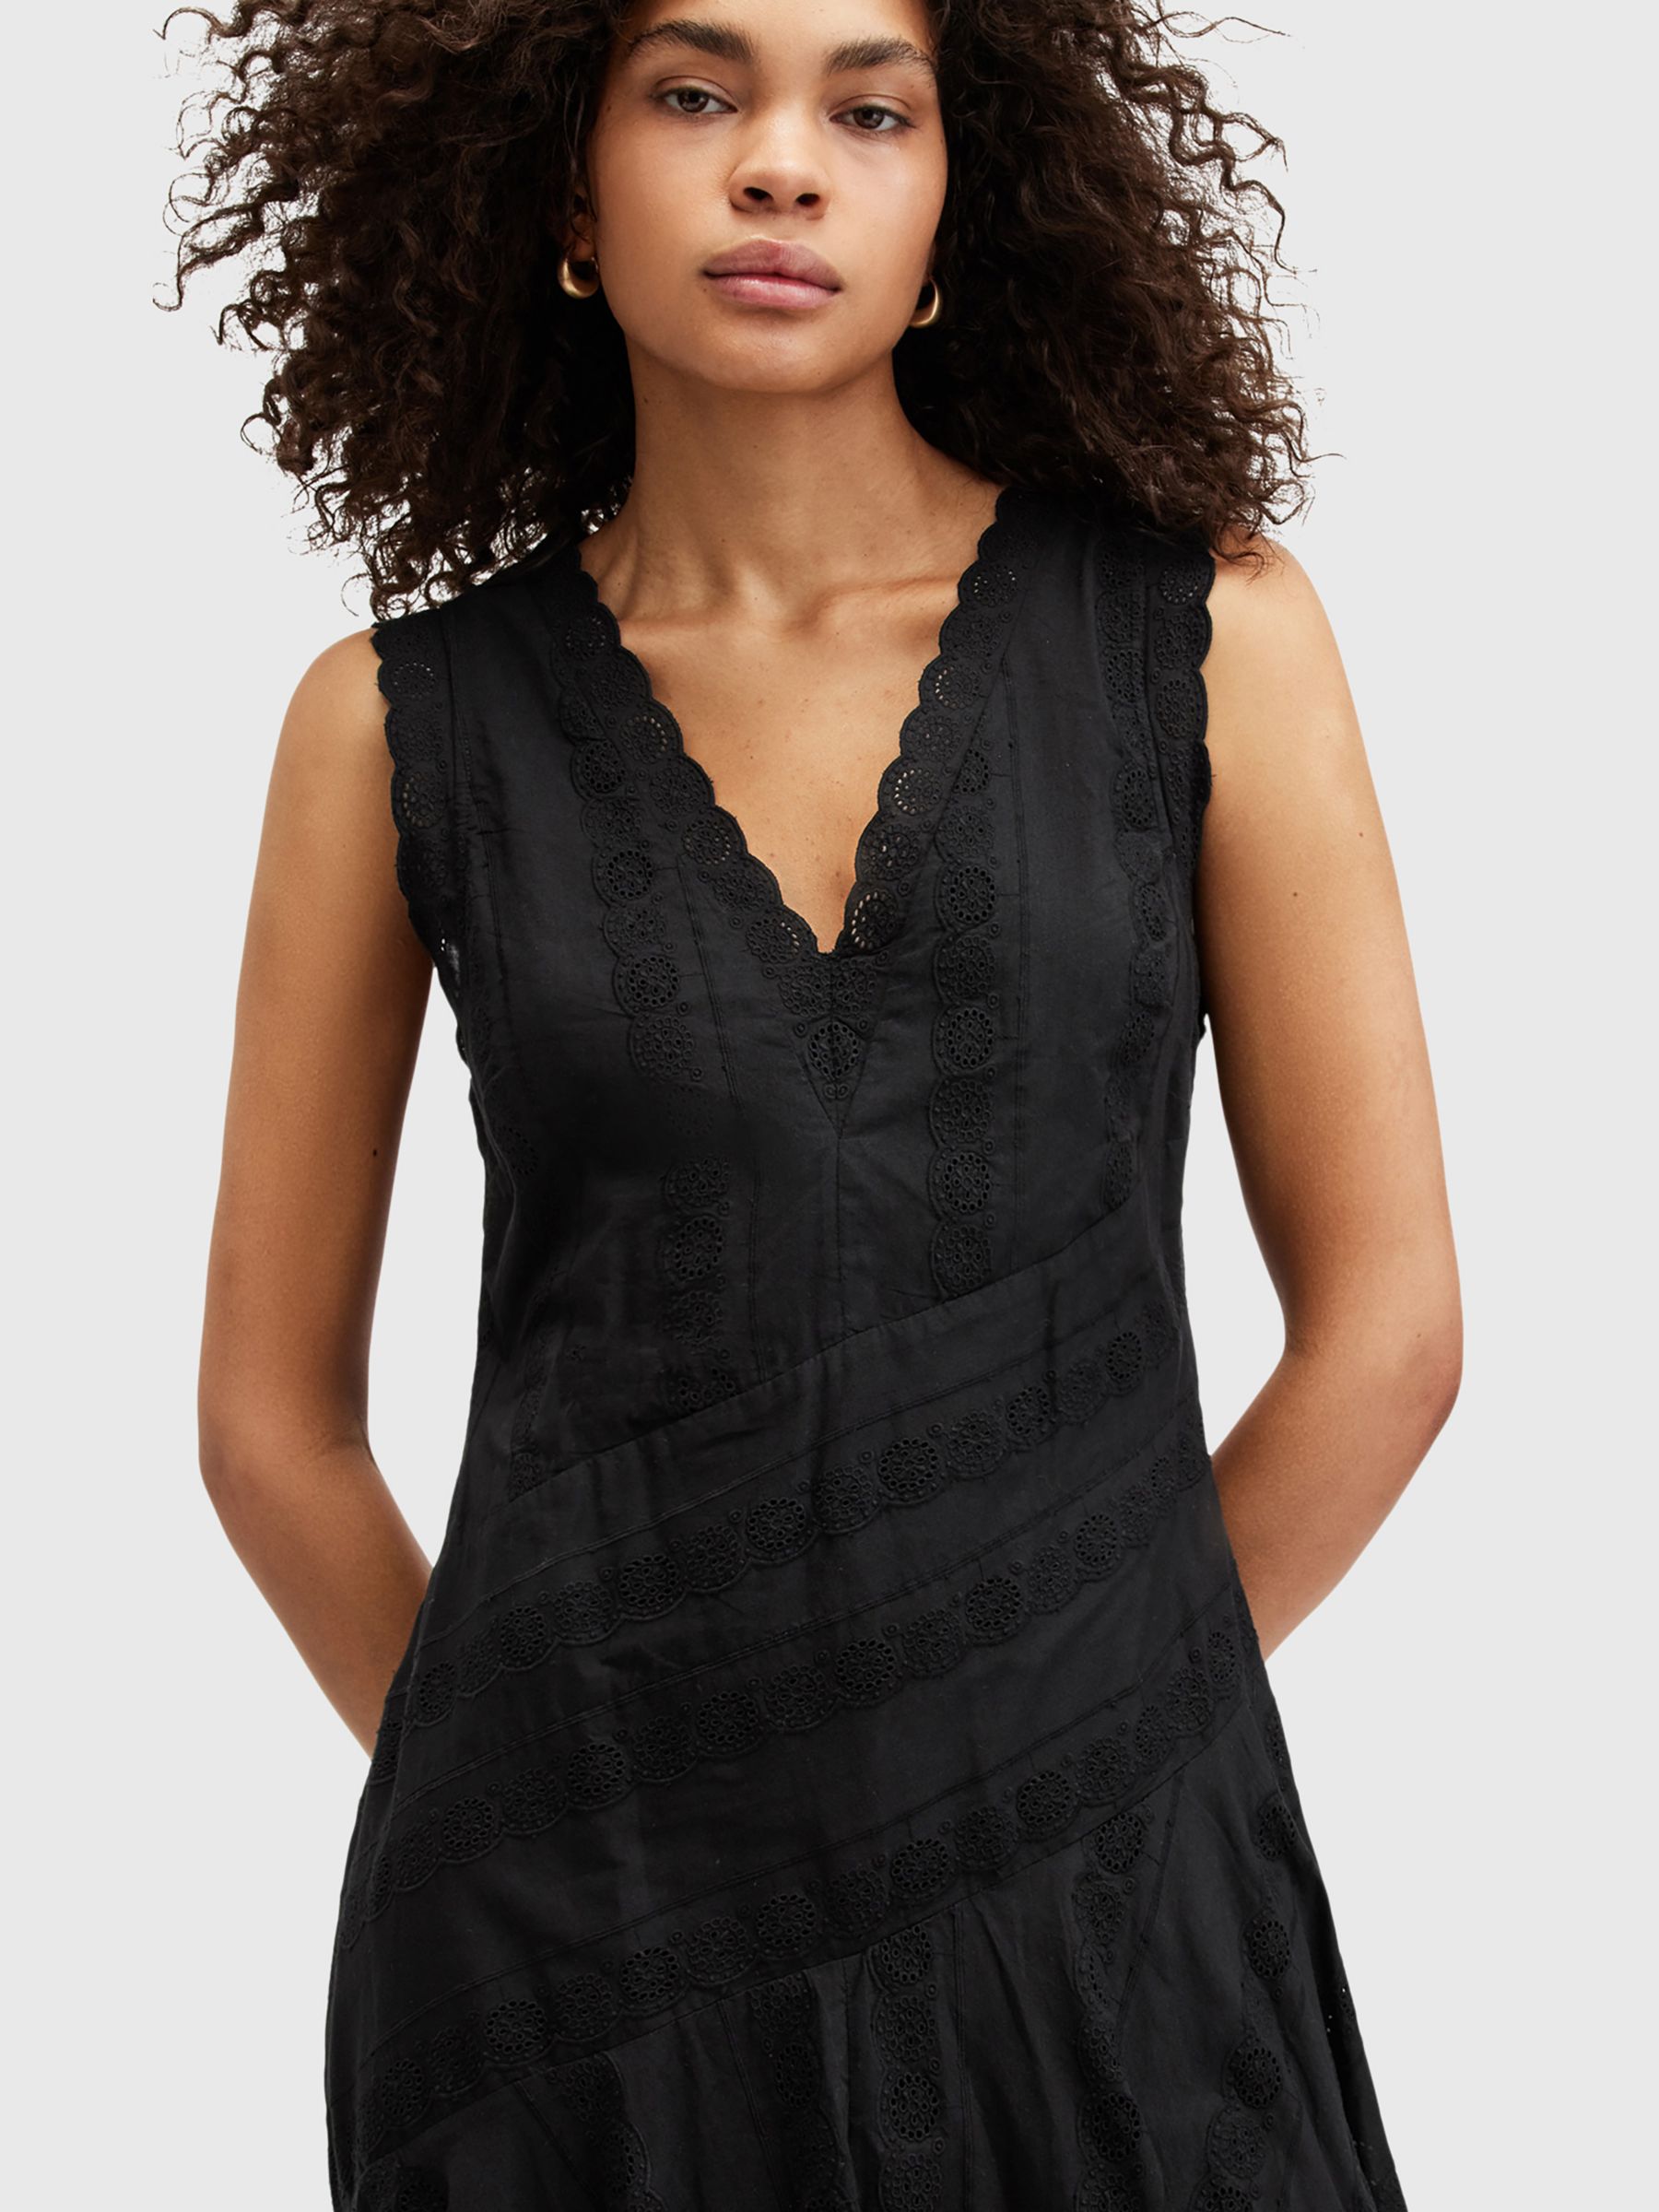 AllSaints Avania Cotton Broderie Midi Dress, Black, 10